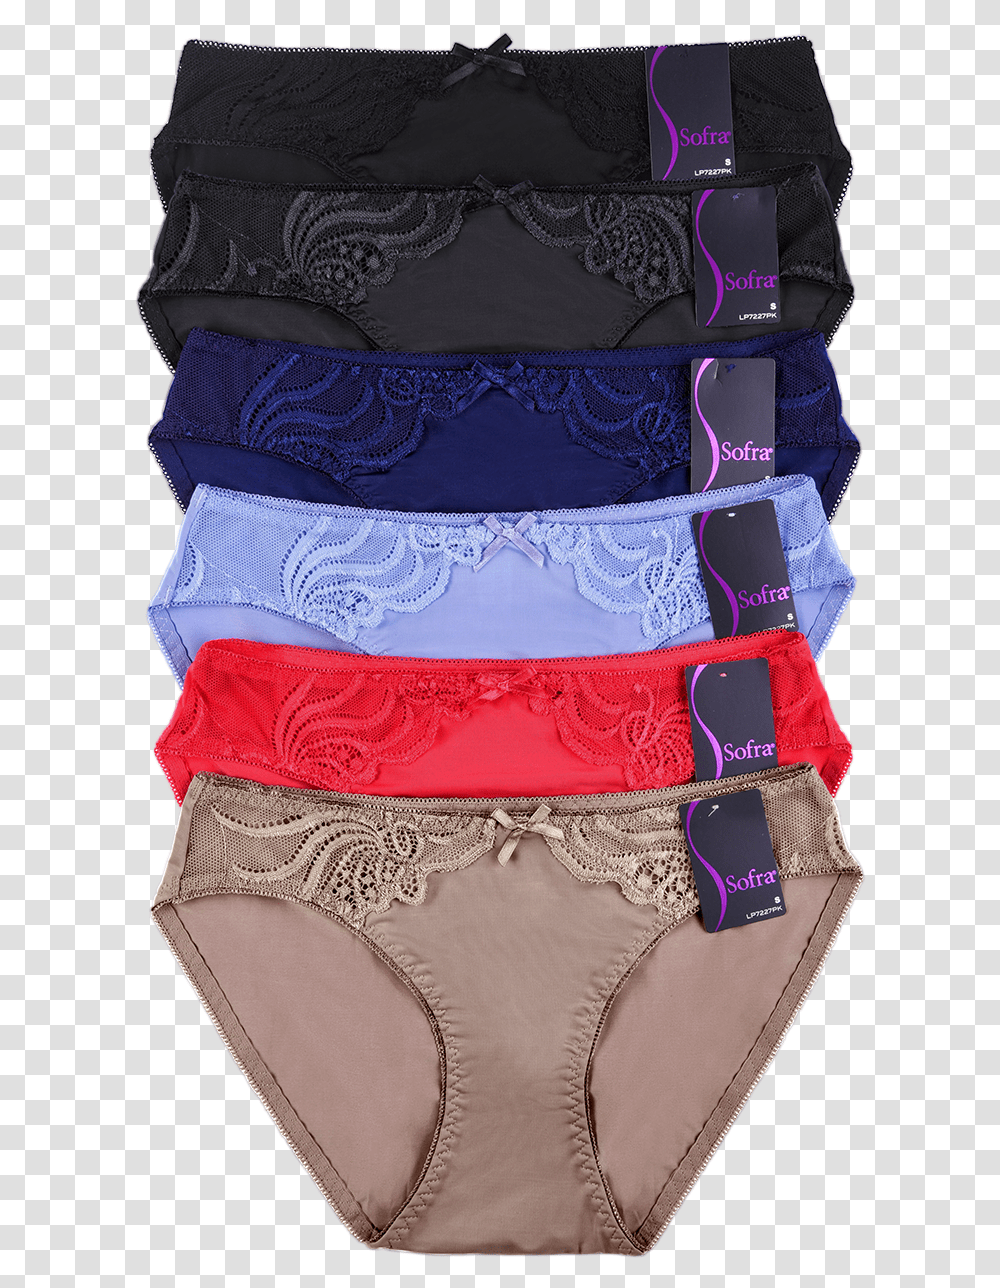 Panties, Apparel, Lingerie, Underwear Transparent Png